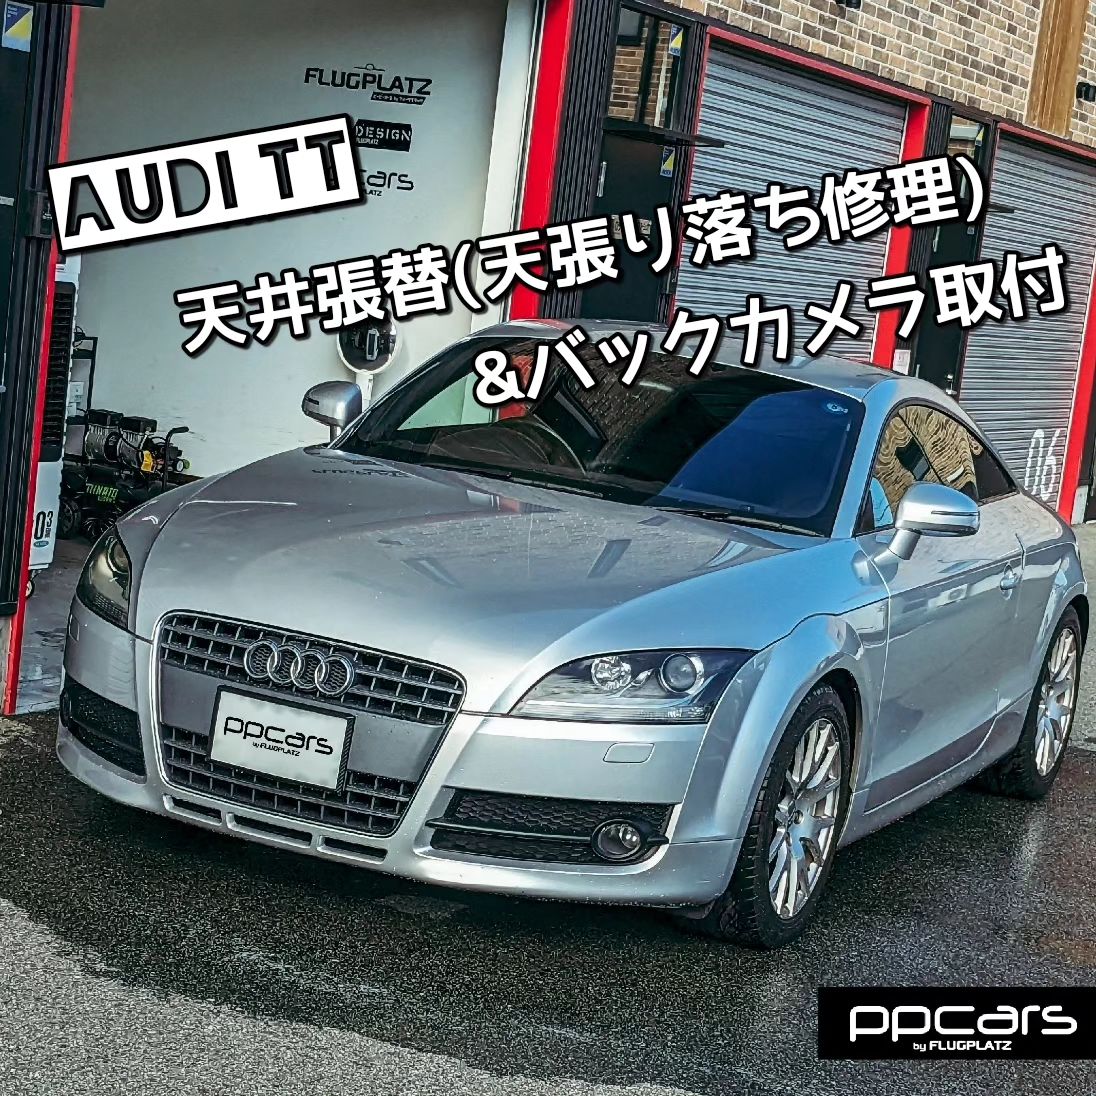 Audi TT(8J) x 天張り(天井落ち)補修 & バックカメラ